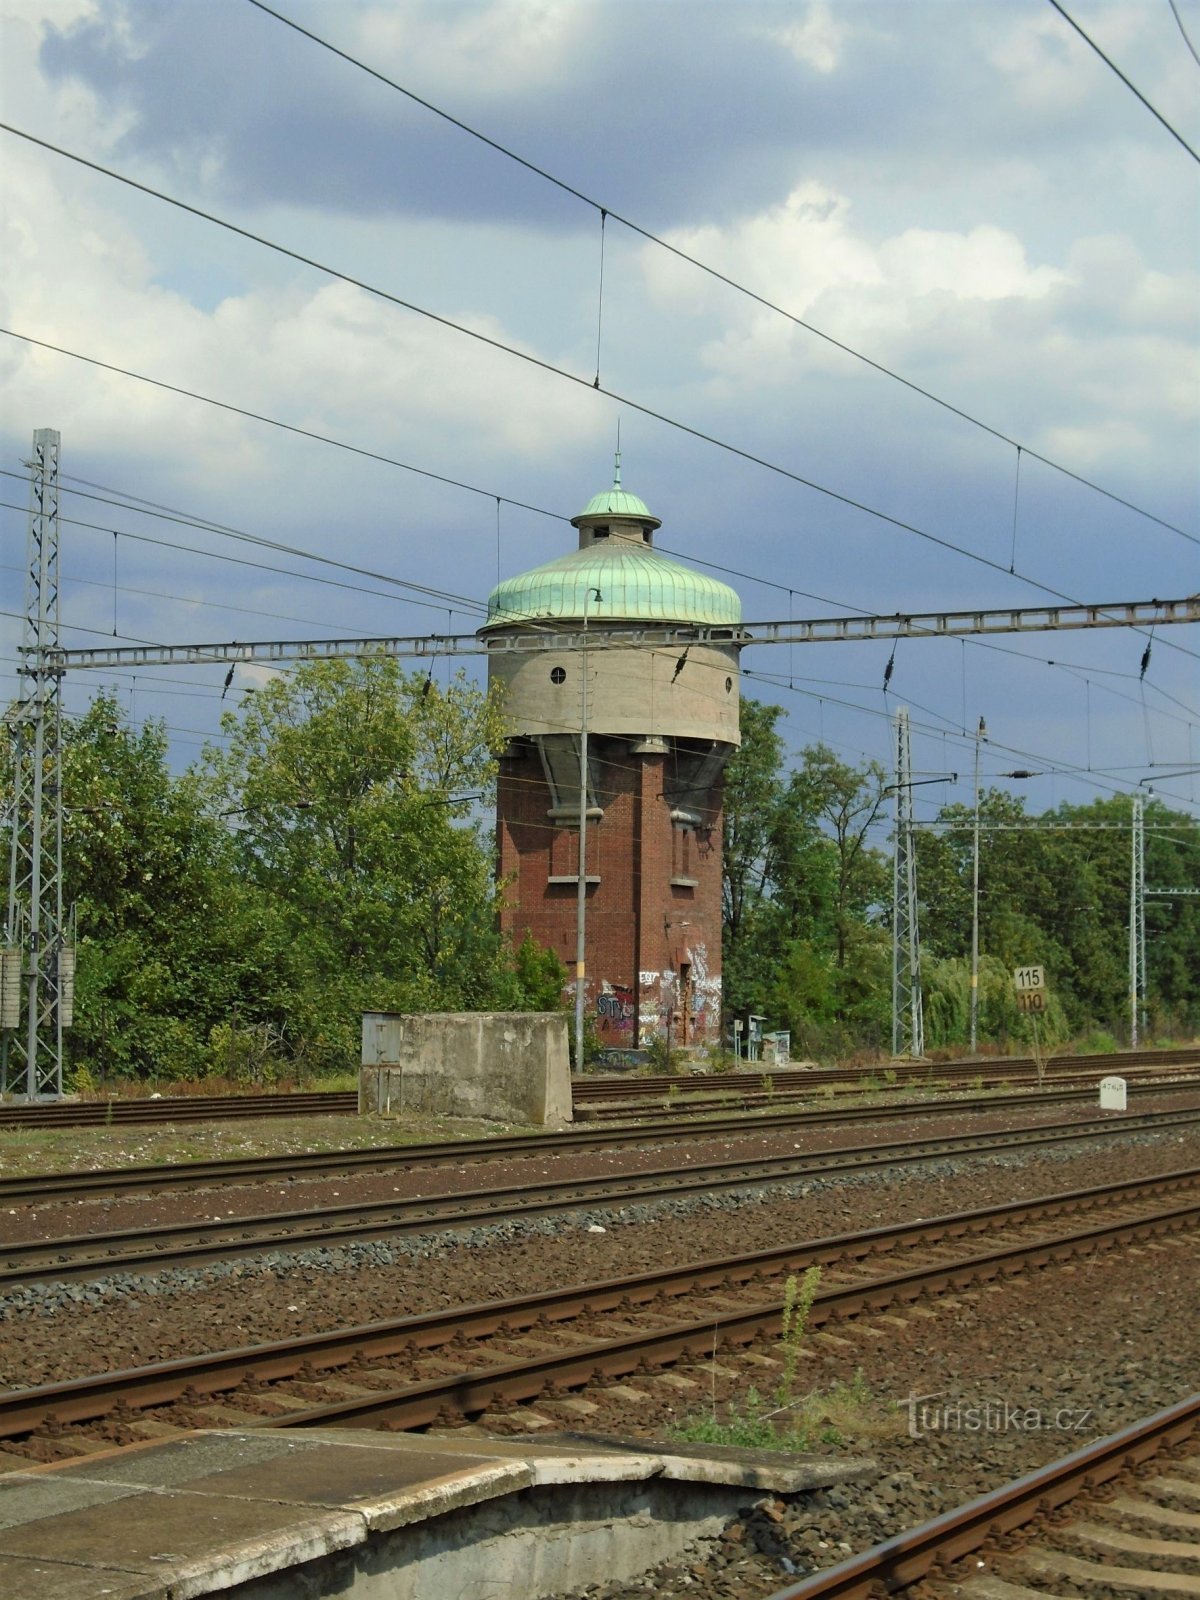 Station tower reservoir (Roudnice nad Labem, 23.7.2018/XNUMX/XNUMX)